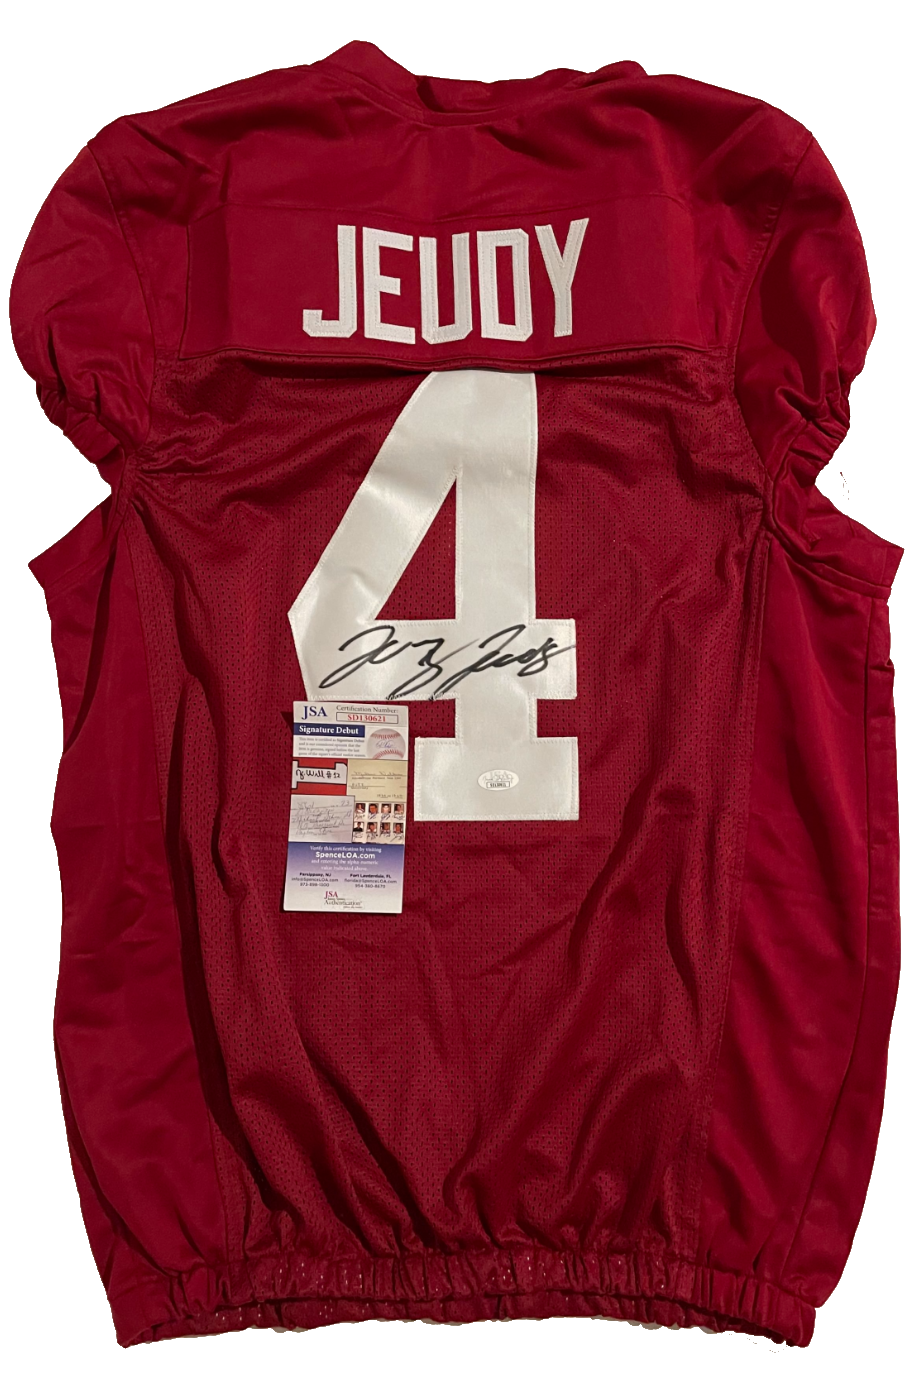 Jerry Jeudy signed Alabama Crimson Tide jersey